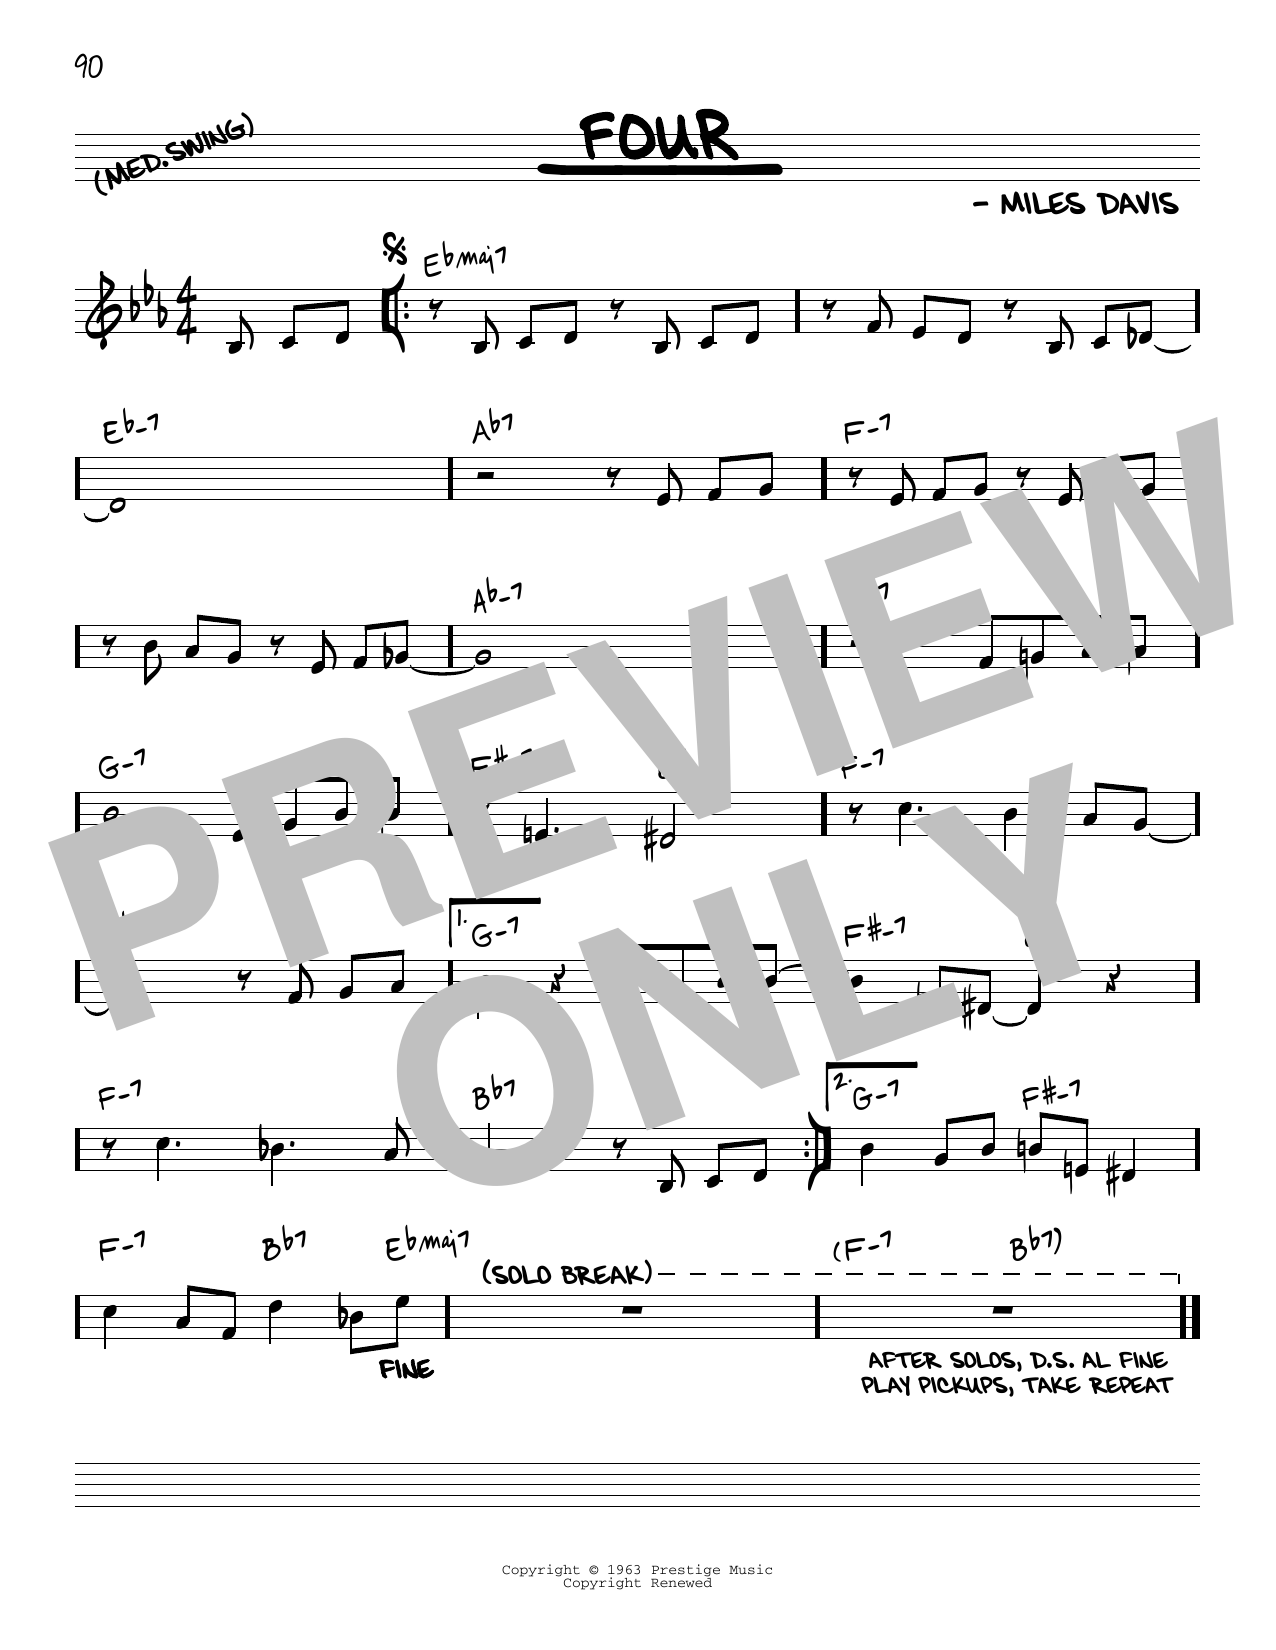 Miles Davis Four Sheet Music Notes & Chords for Guitar Ensemble - Download or Print PDF